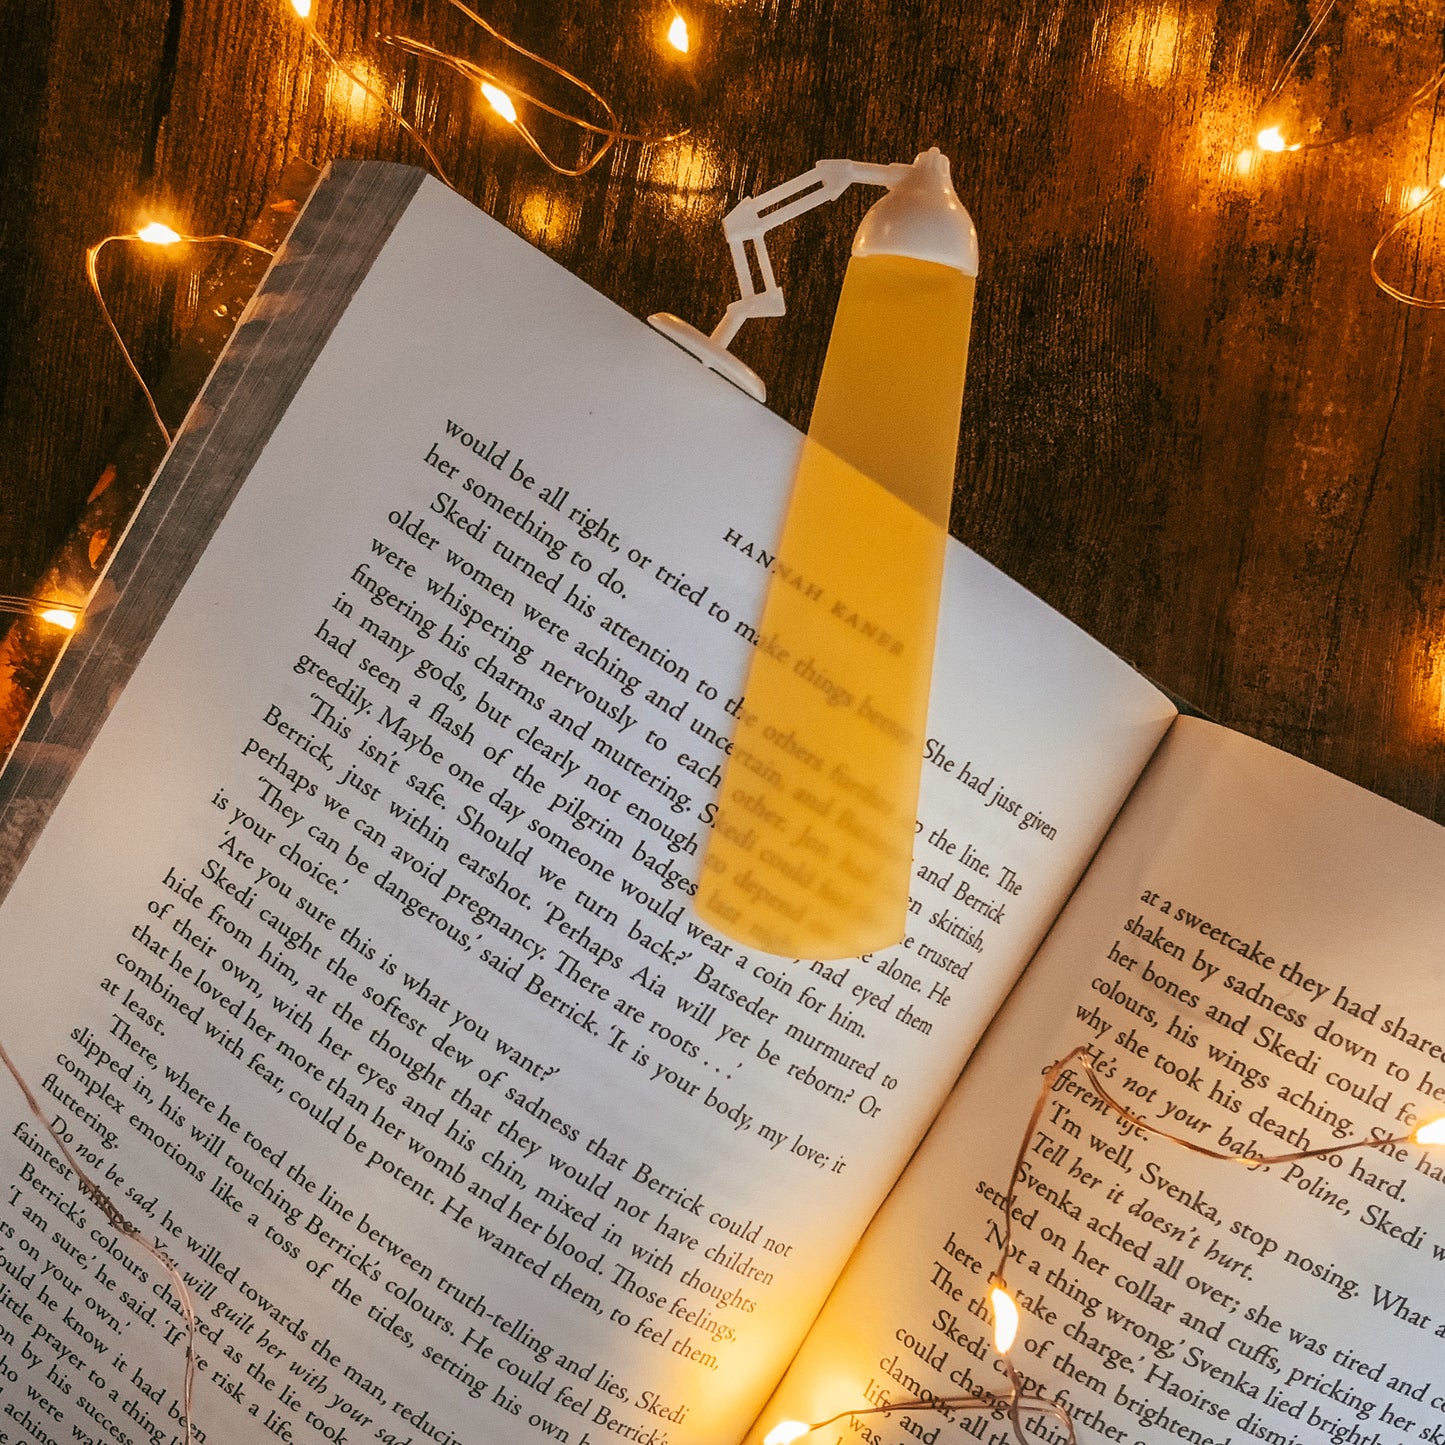 Lamp Bookmark